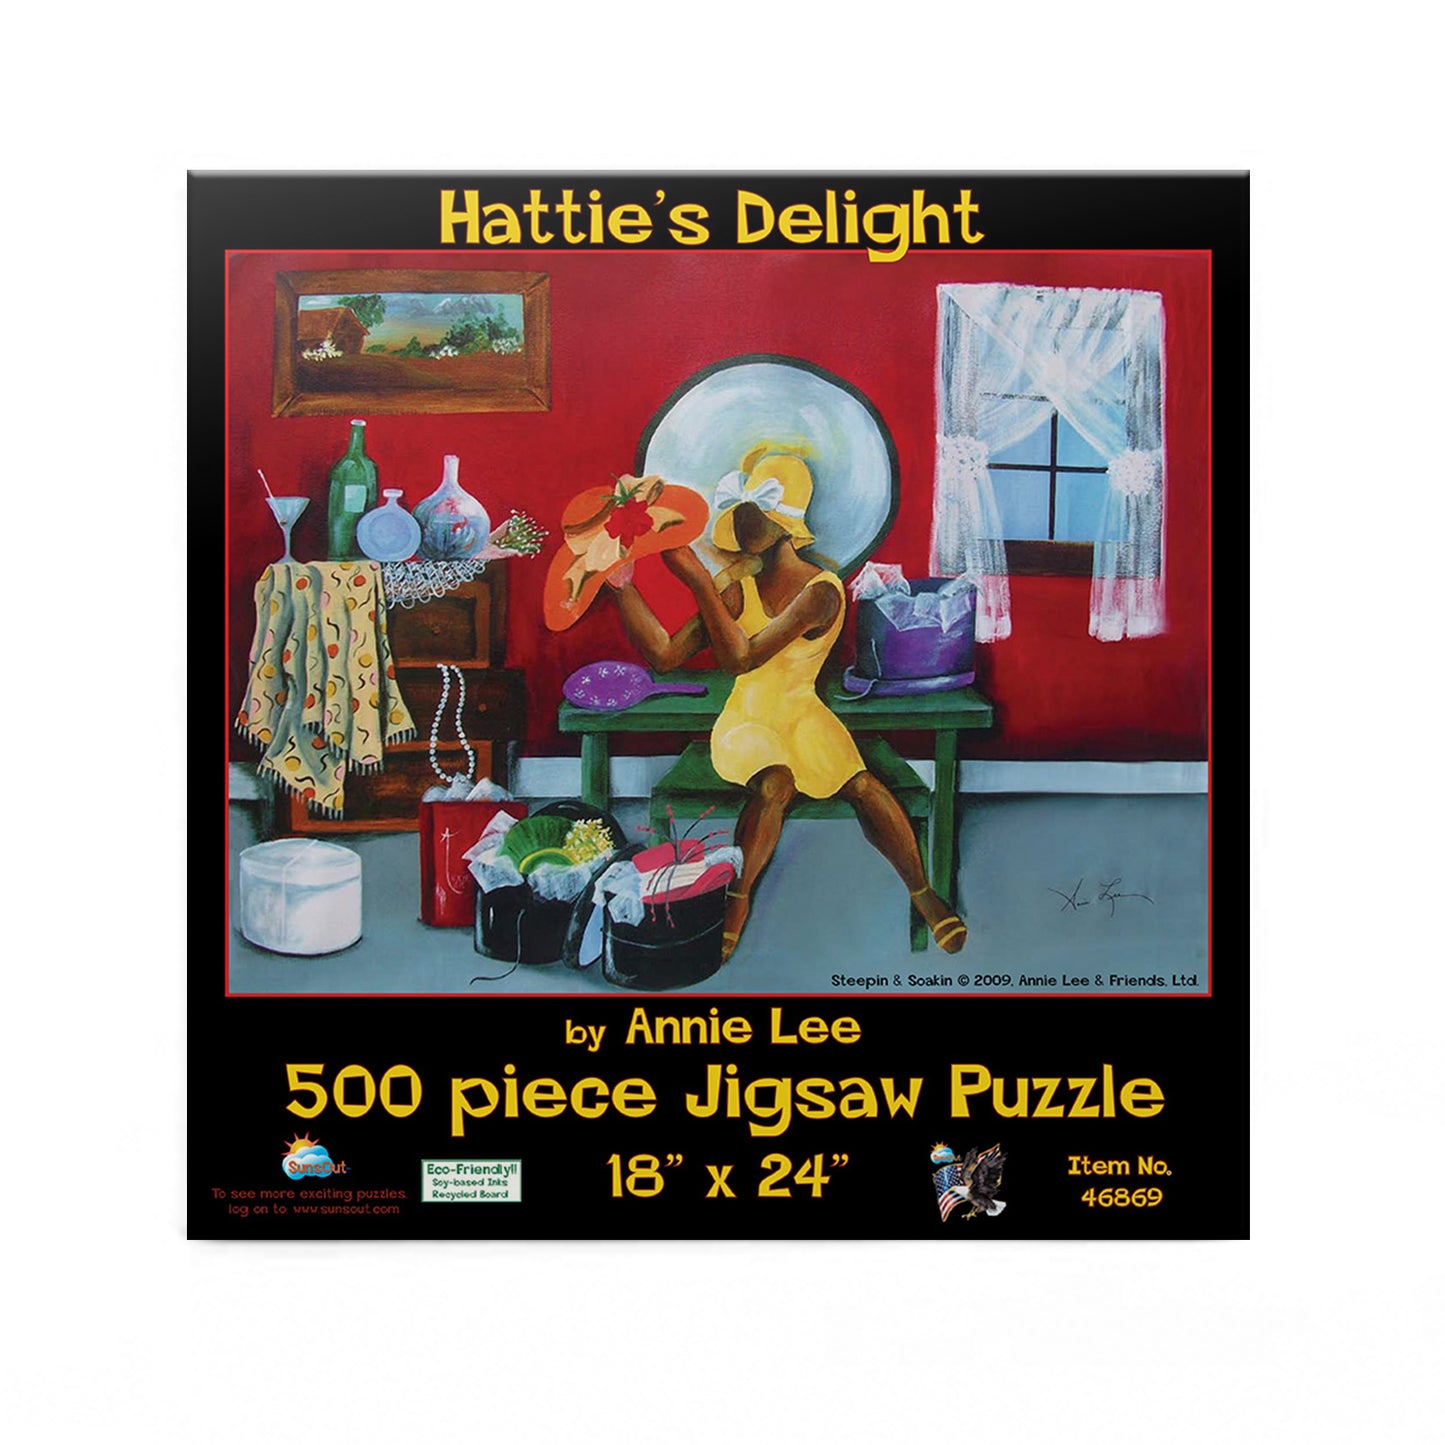 Hattie's Delight - 500 Piece Jigsaw Puzzle